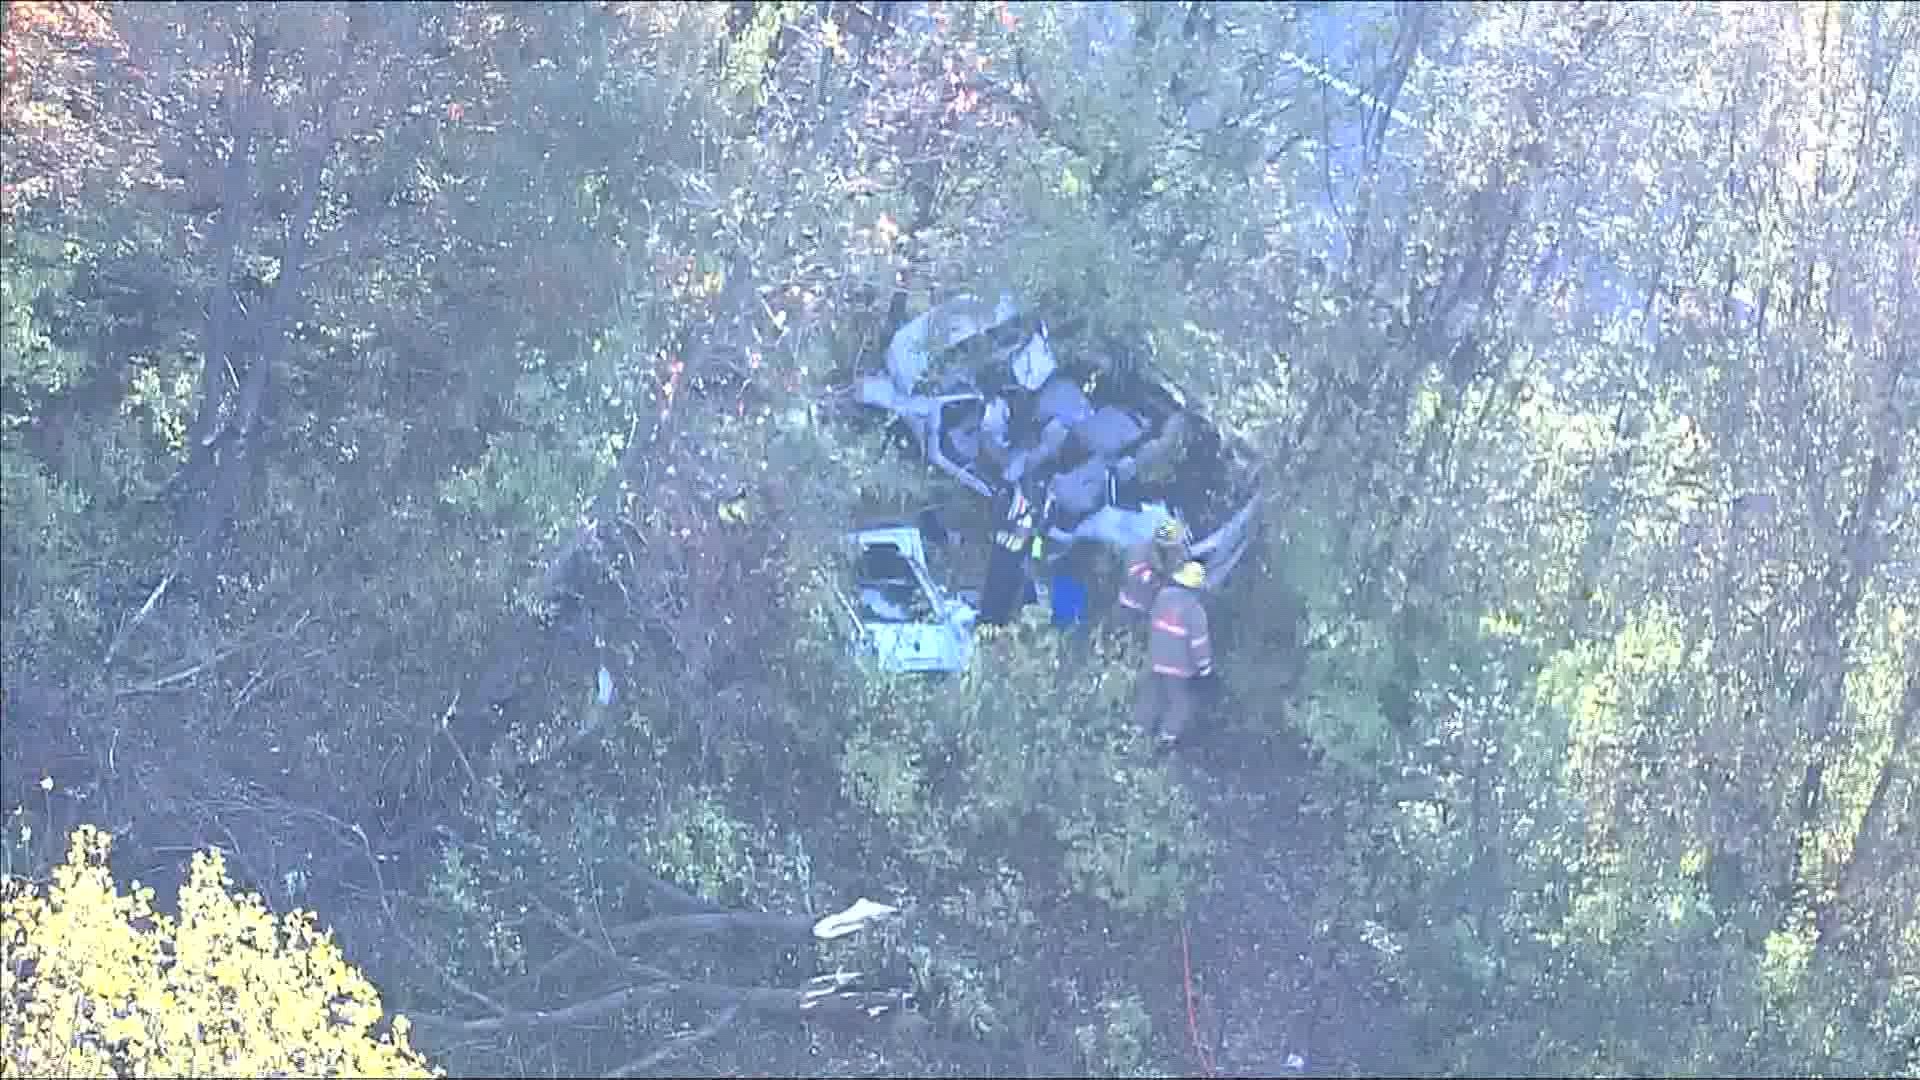 Crash investigators believe the driver had a medical emergency.